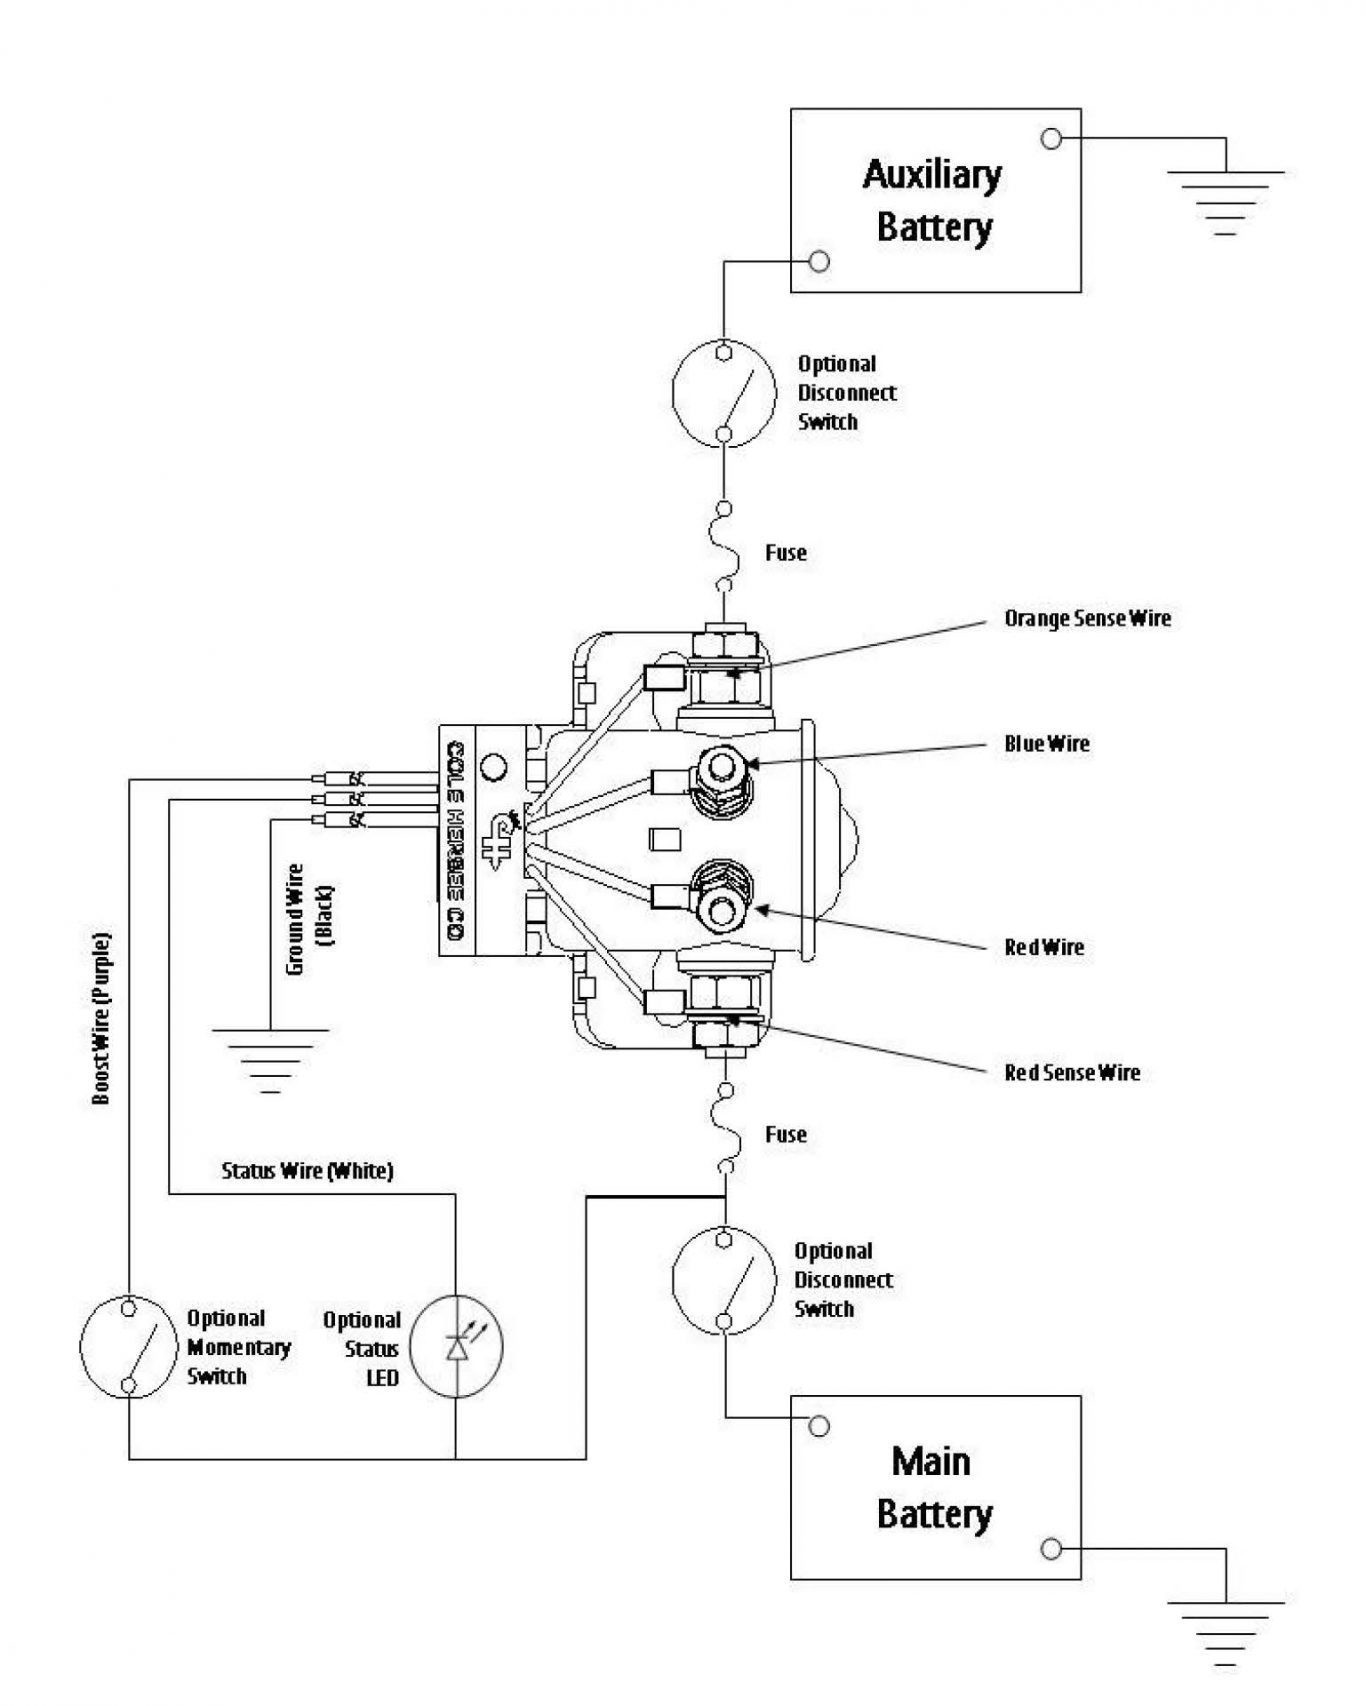 Atv Winch Wiring Diagram | My Wiring DIagram heated driveway electric wiring diagram 